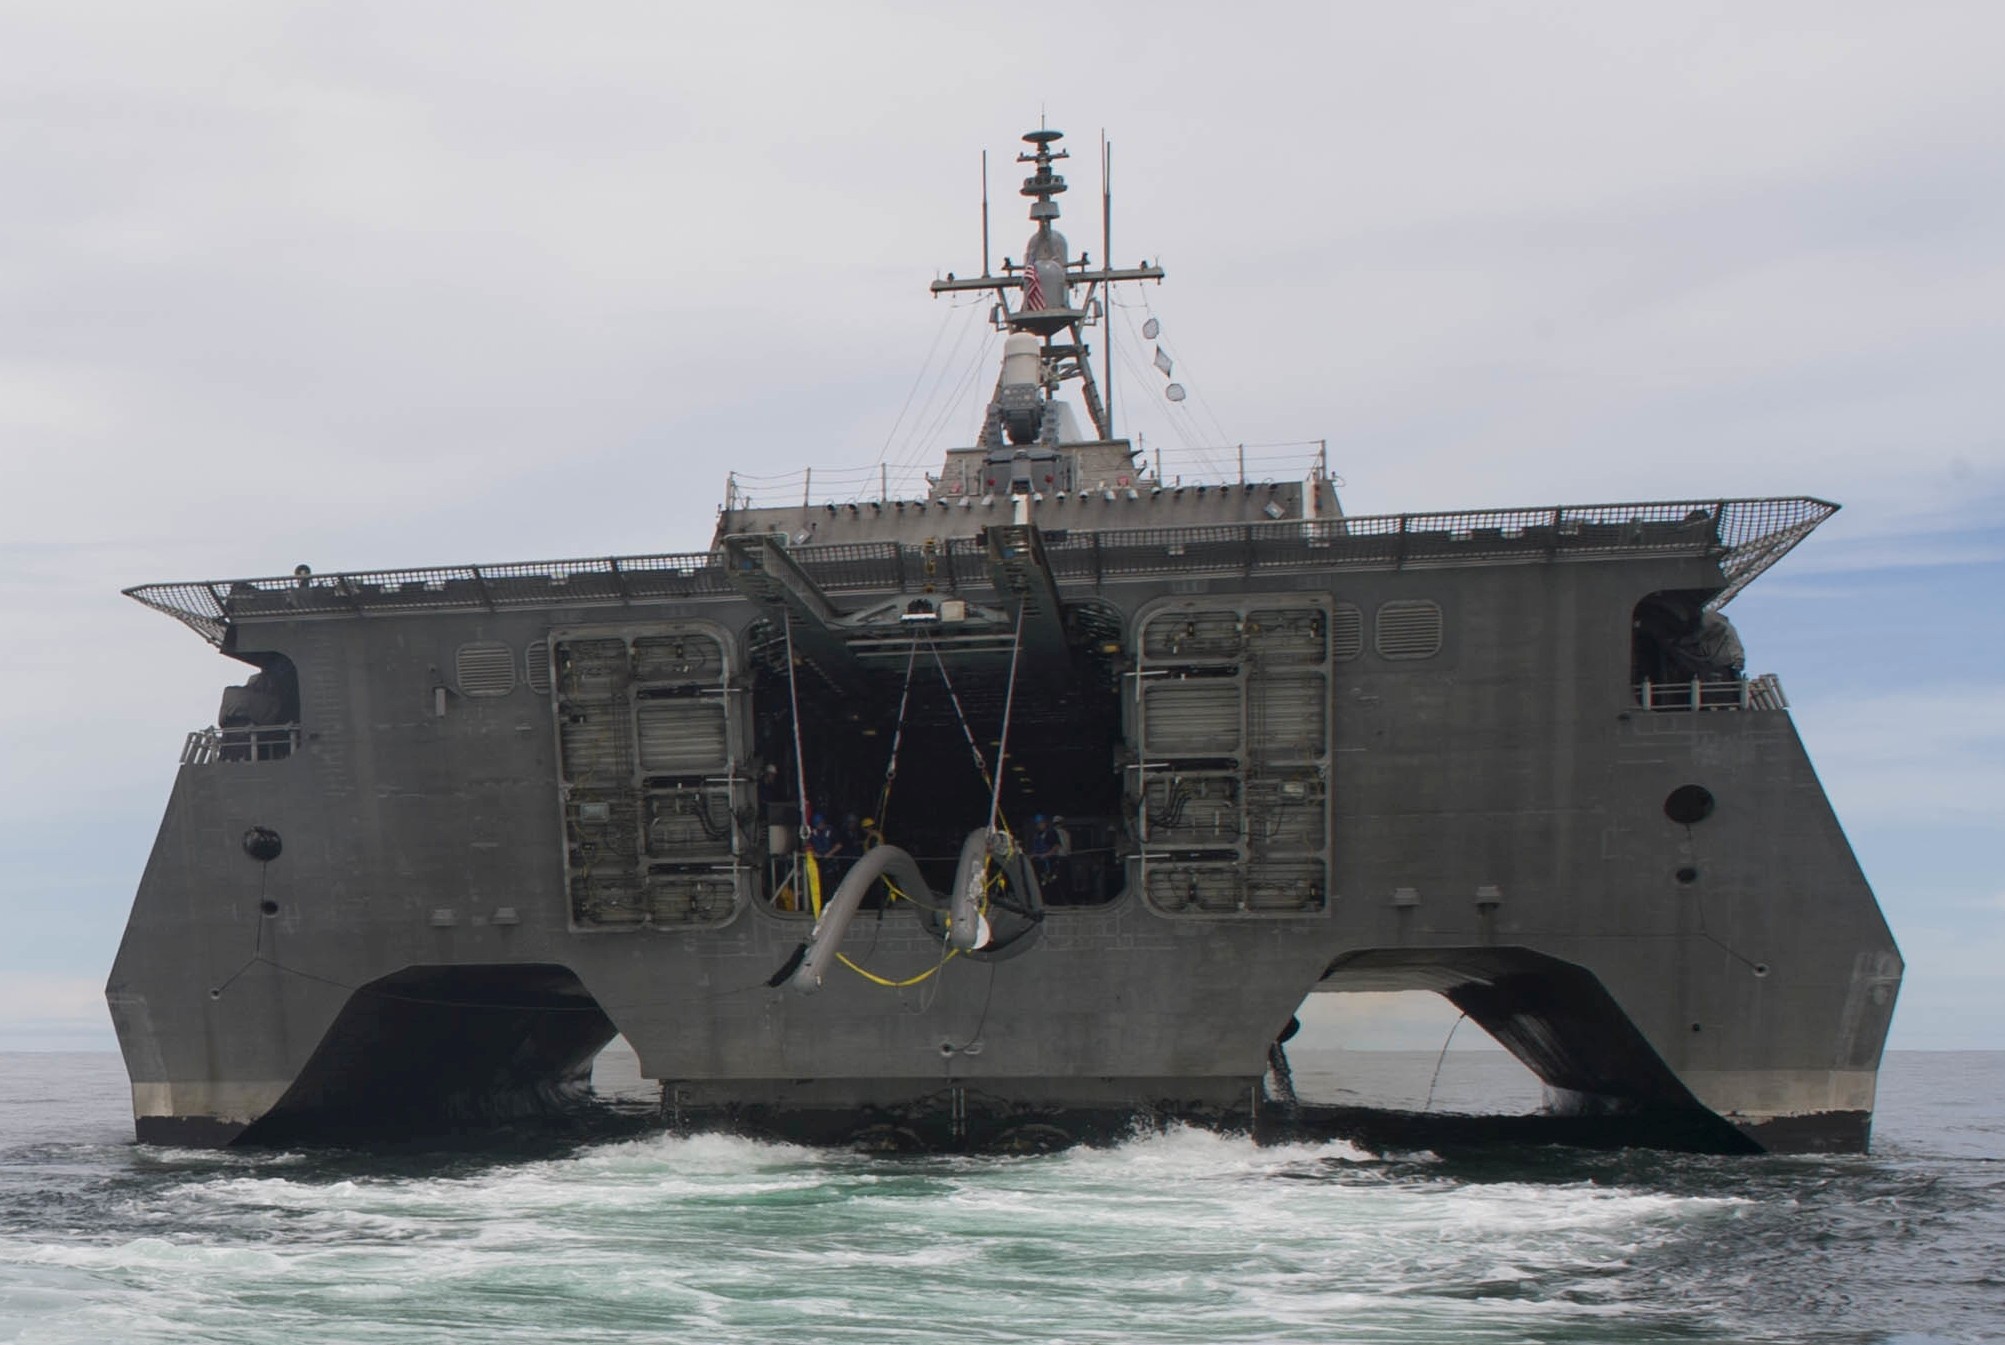 lcs-4 uss coronado independence class littoral combat ship us navy 17